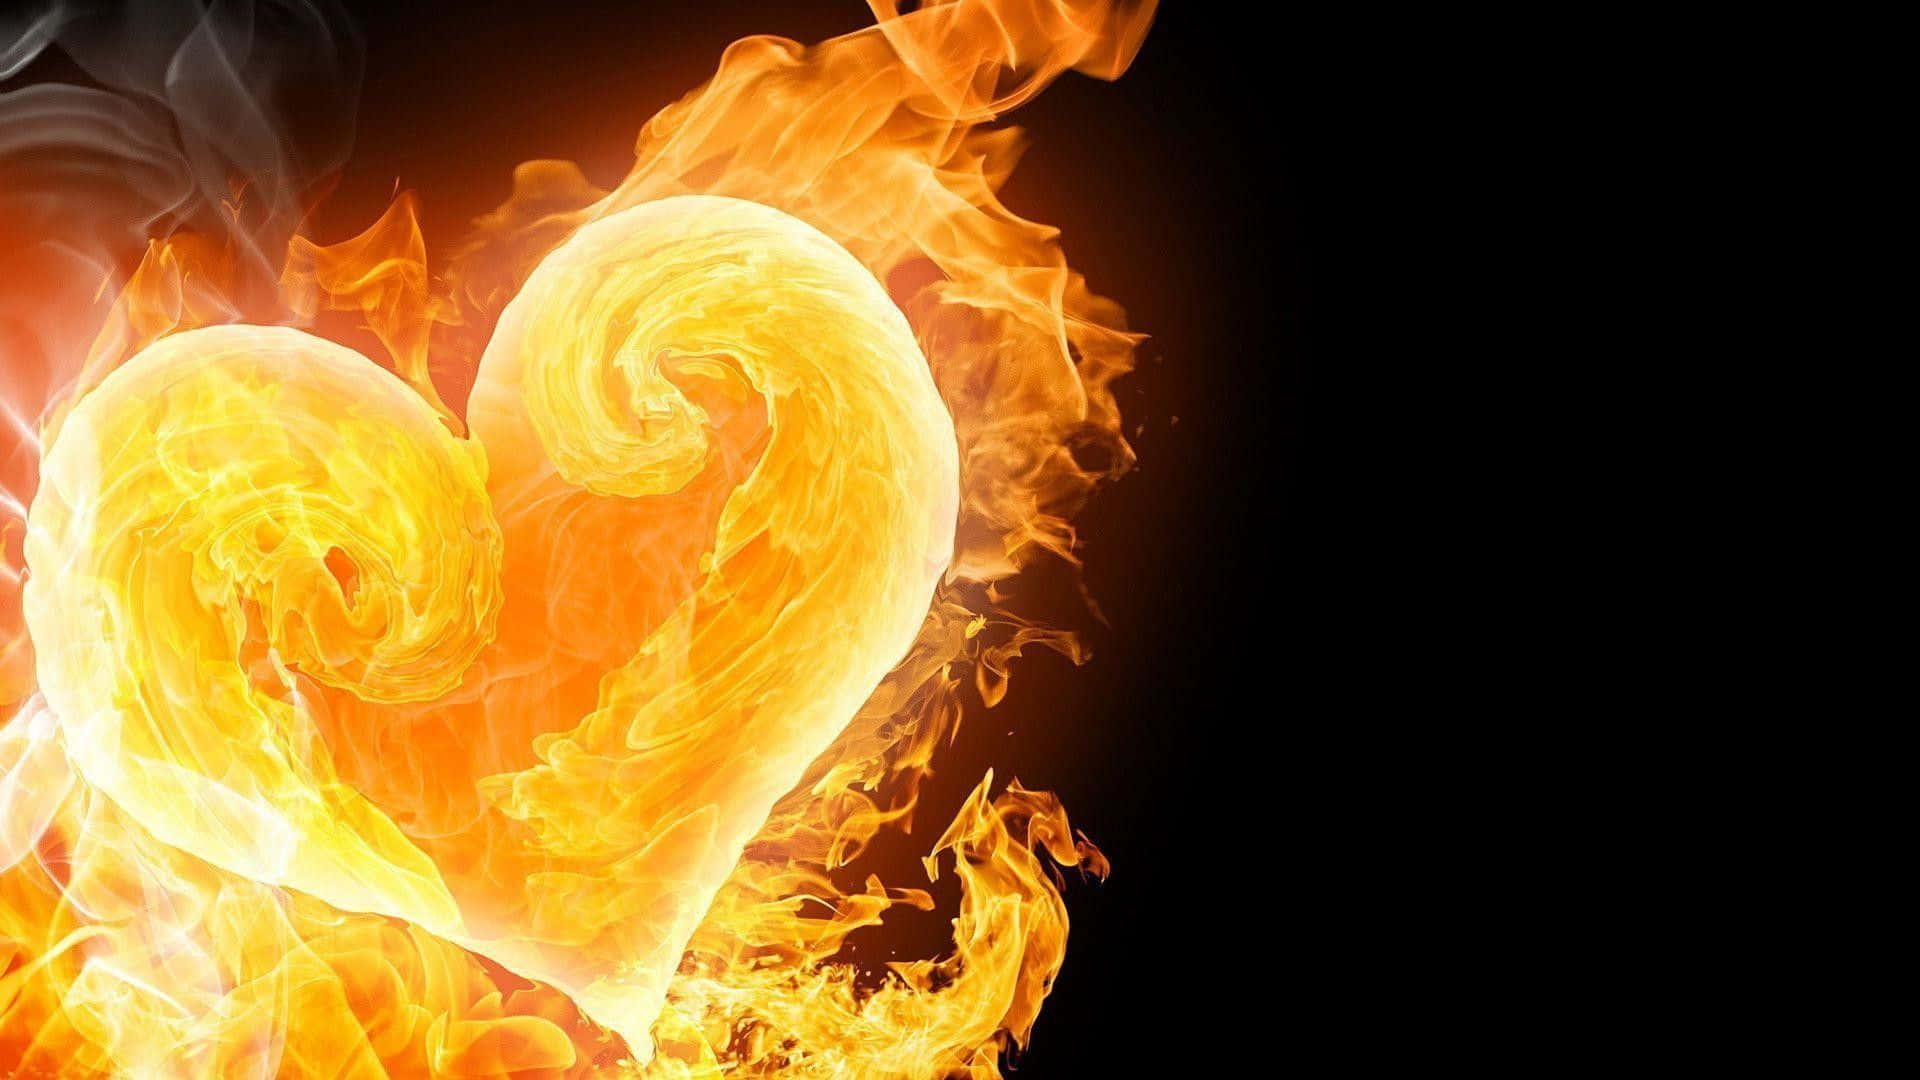 a heart shaped flame on a black background